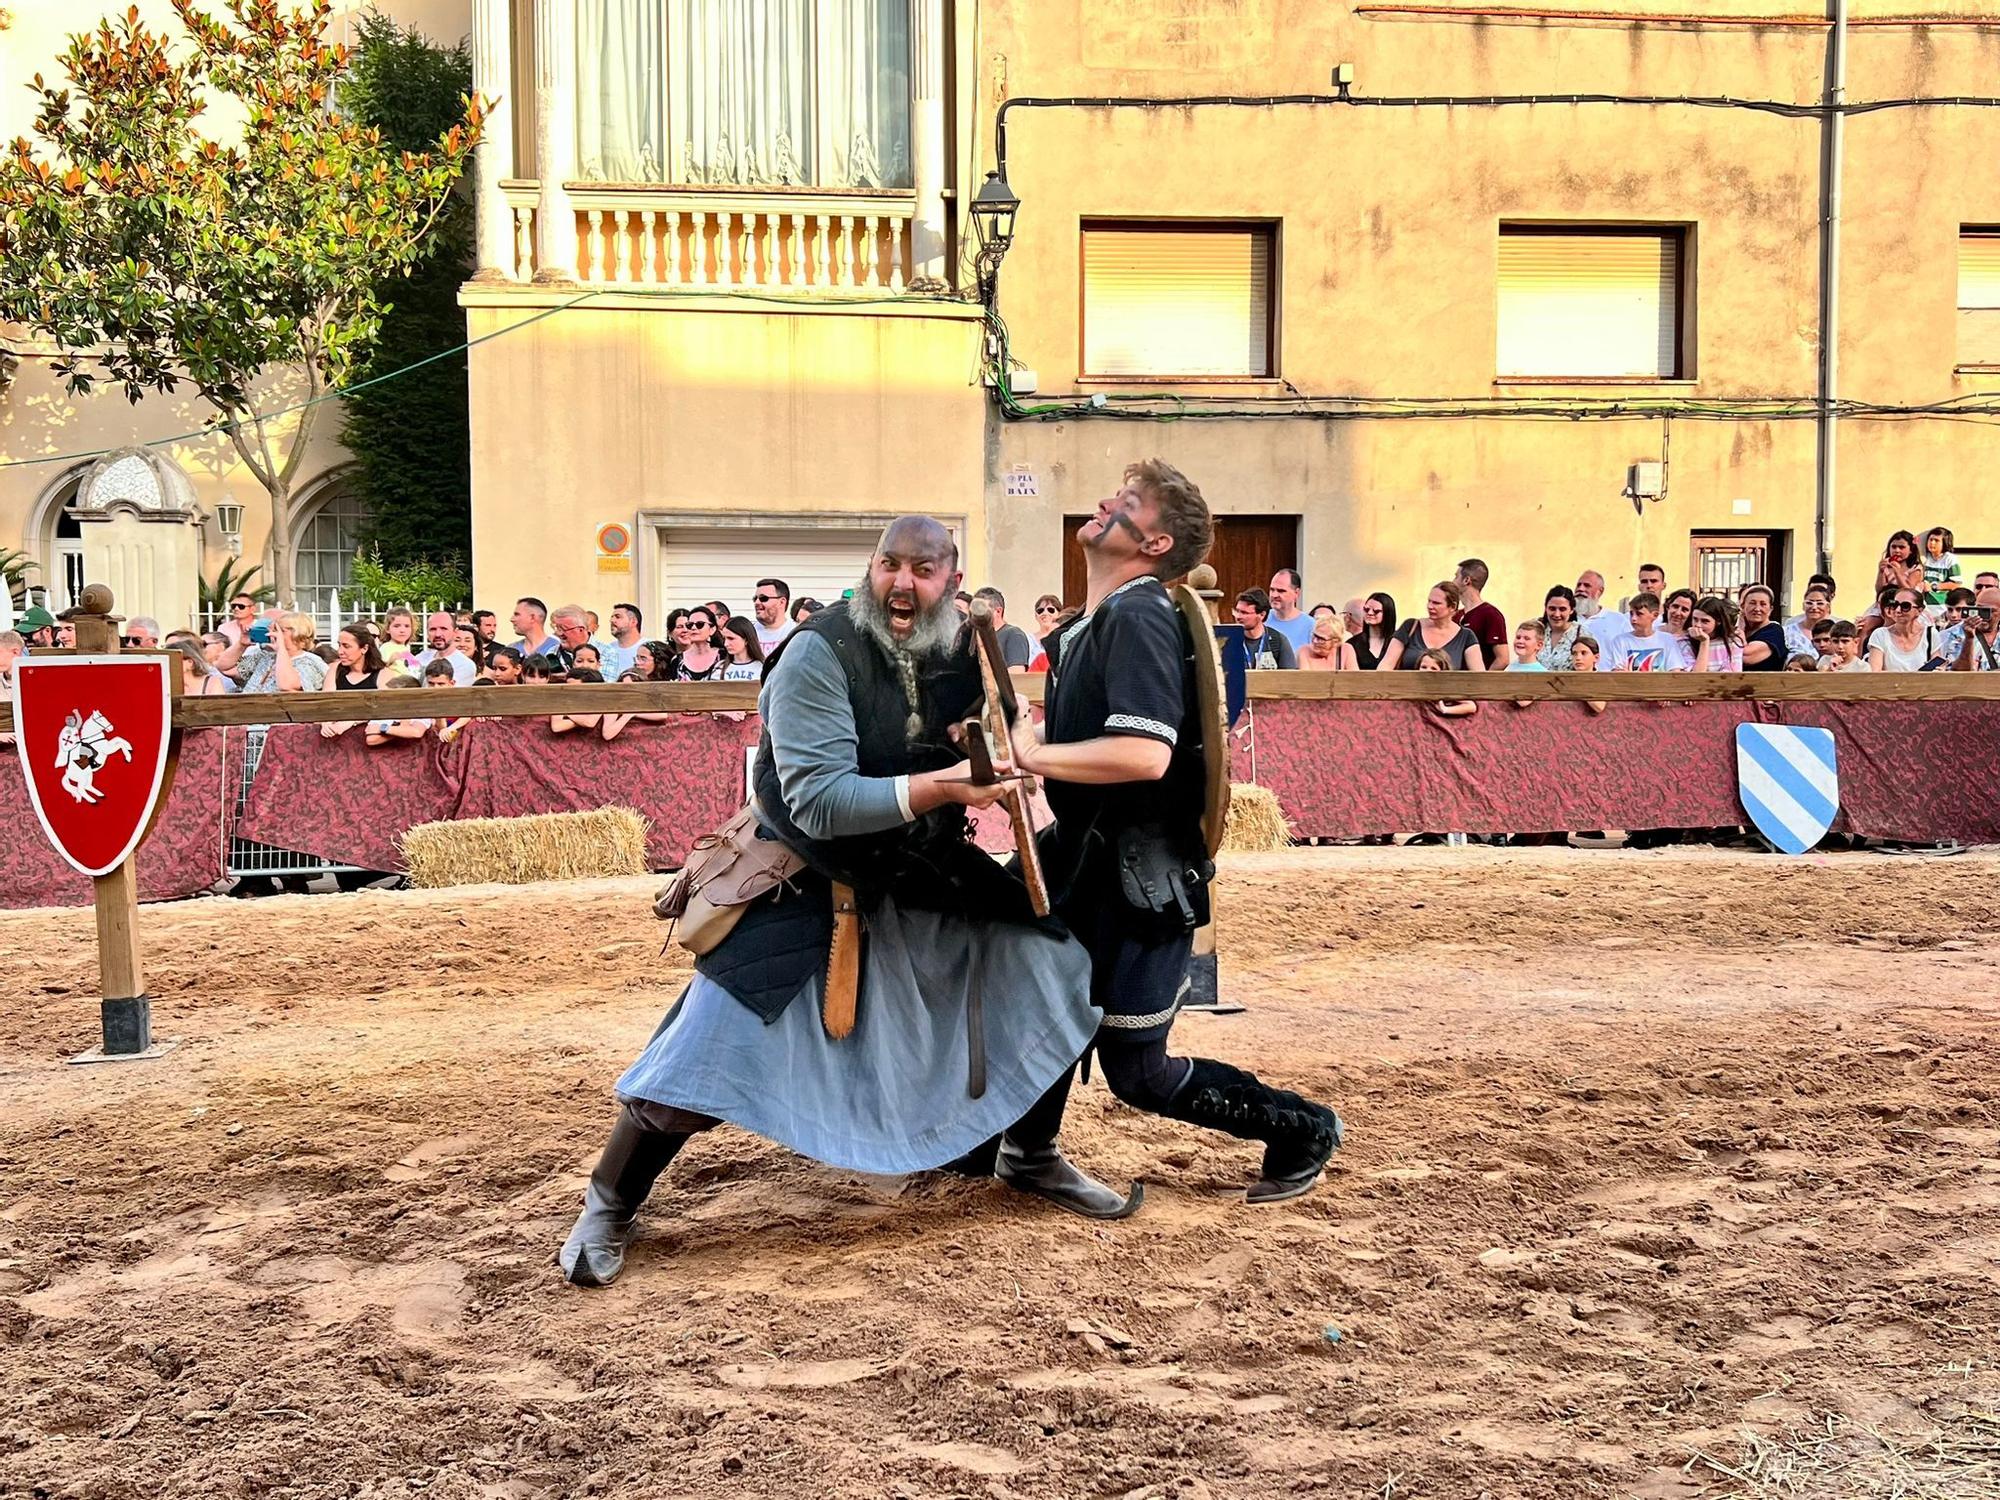 Épicas fotos de combate en el último día de Sant Mateu Medieval